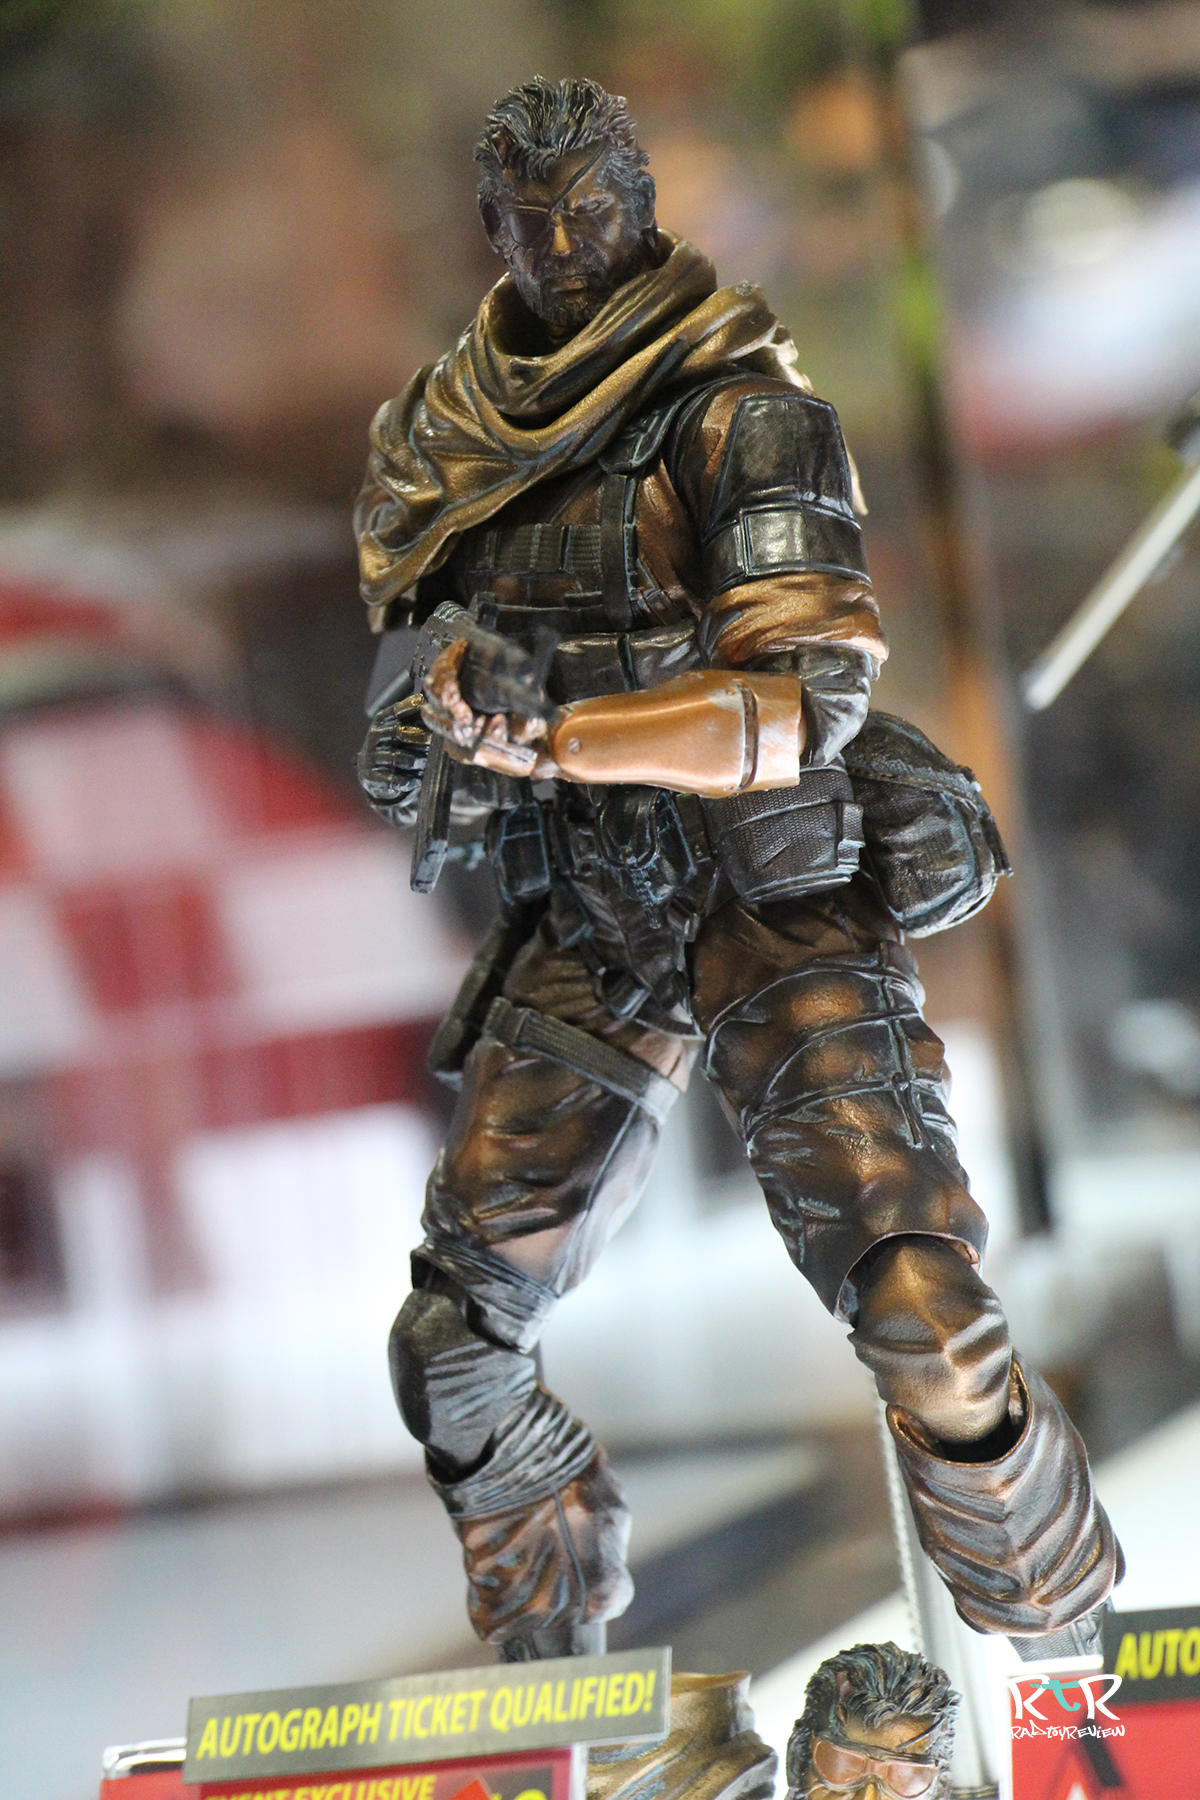 Play Arts Kai Metal Gear Solid V Action Figure The Phantom Pain Venom Snake 